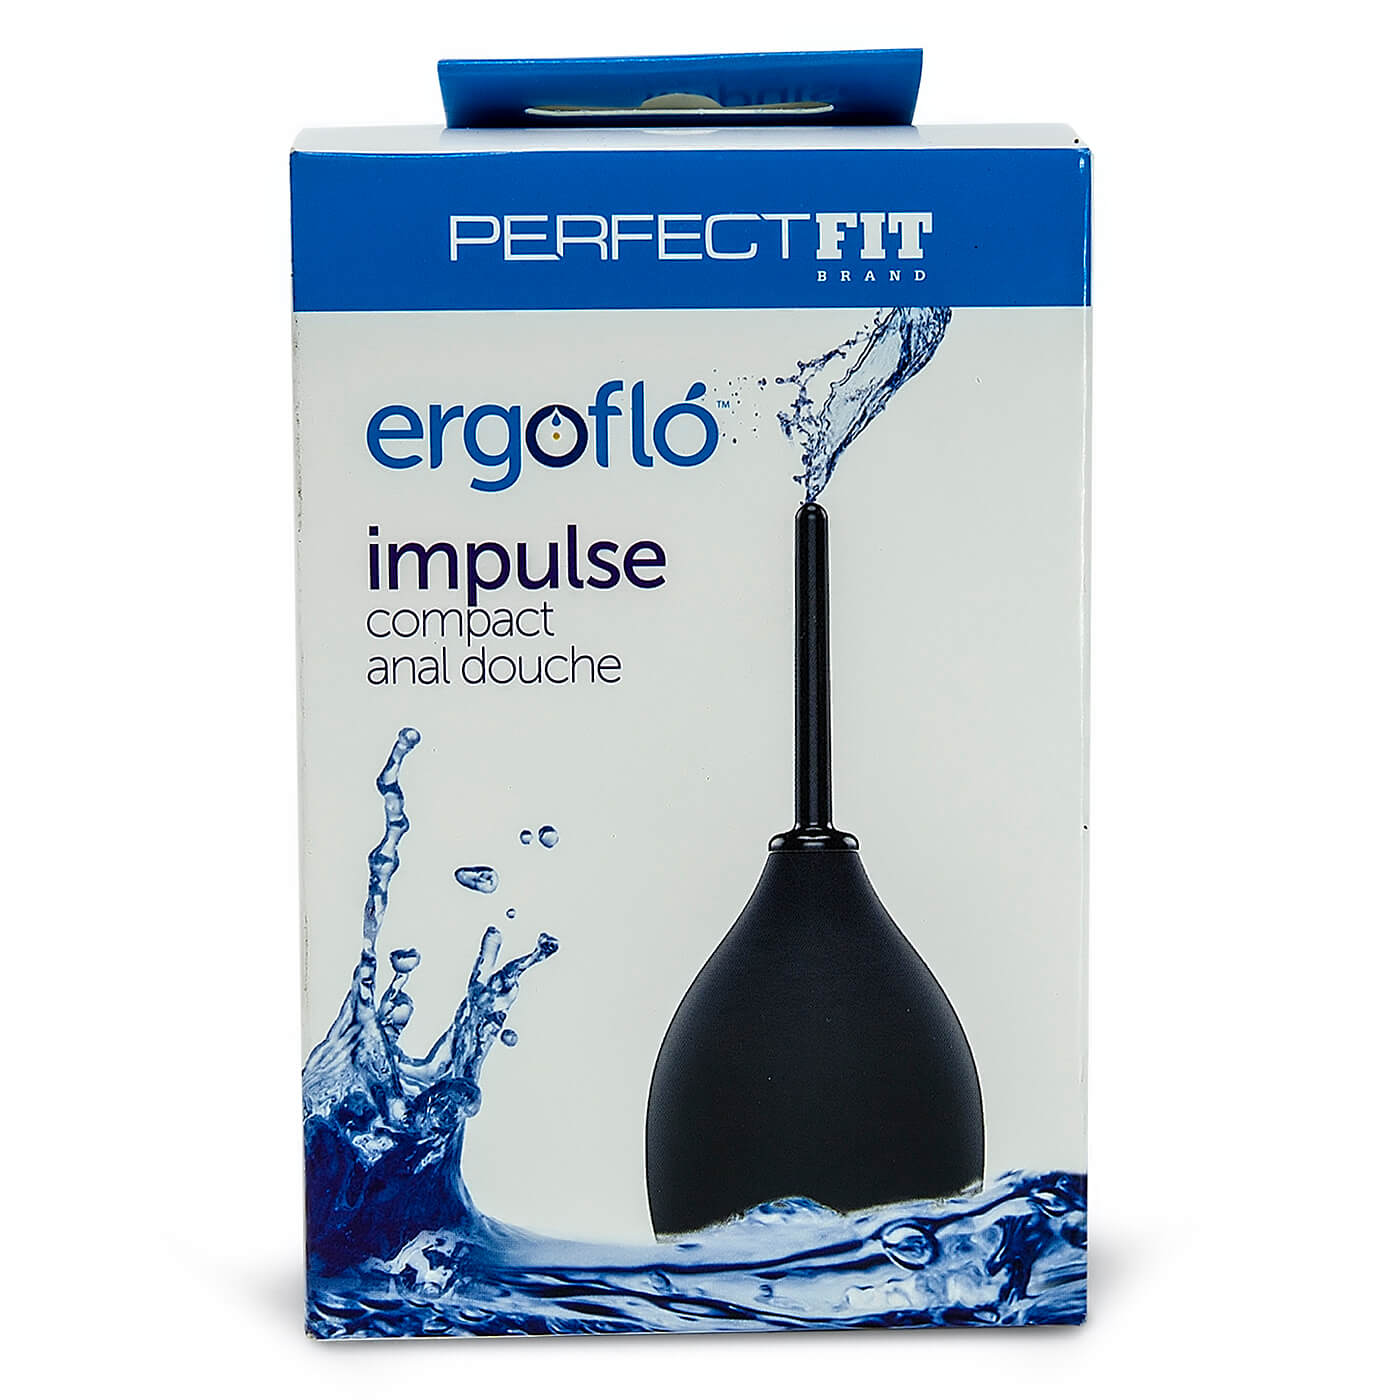 Ergoflo Impulse Water-Tight Leak-Proof Douche for Anal Hygiene